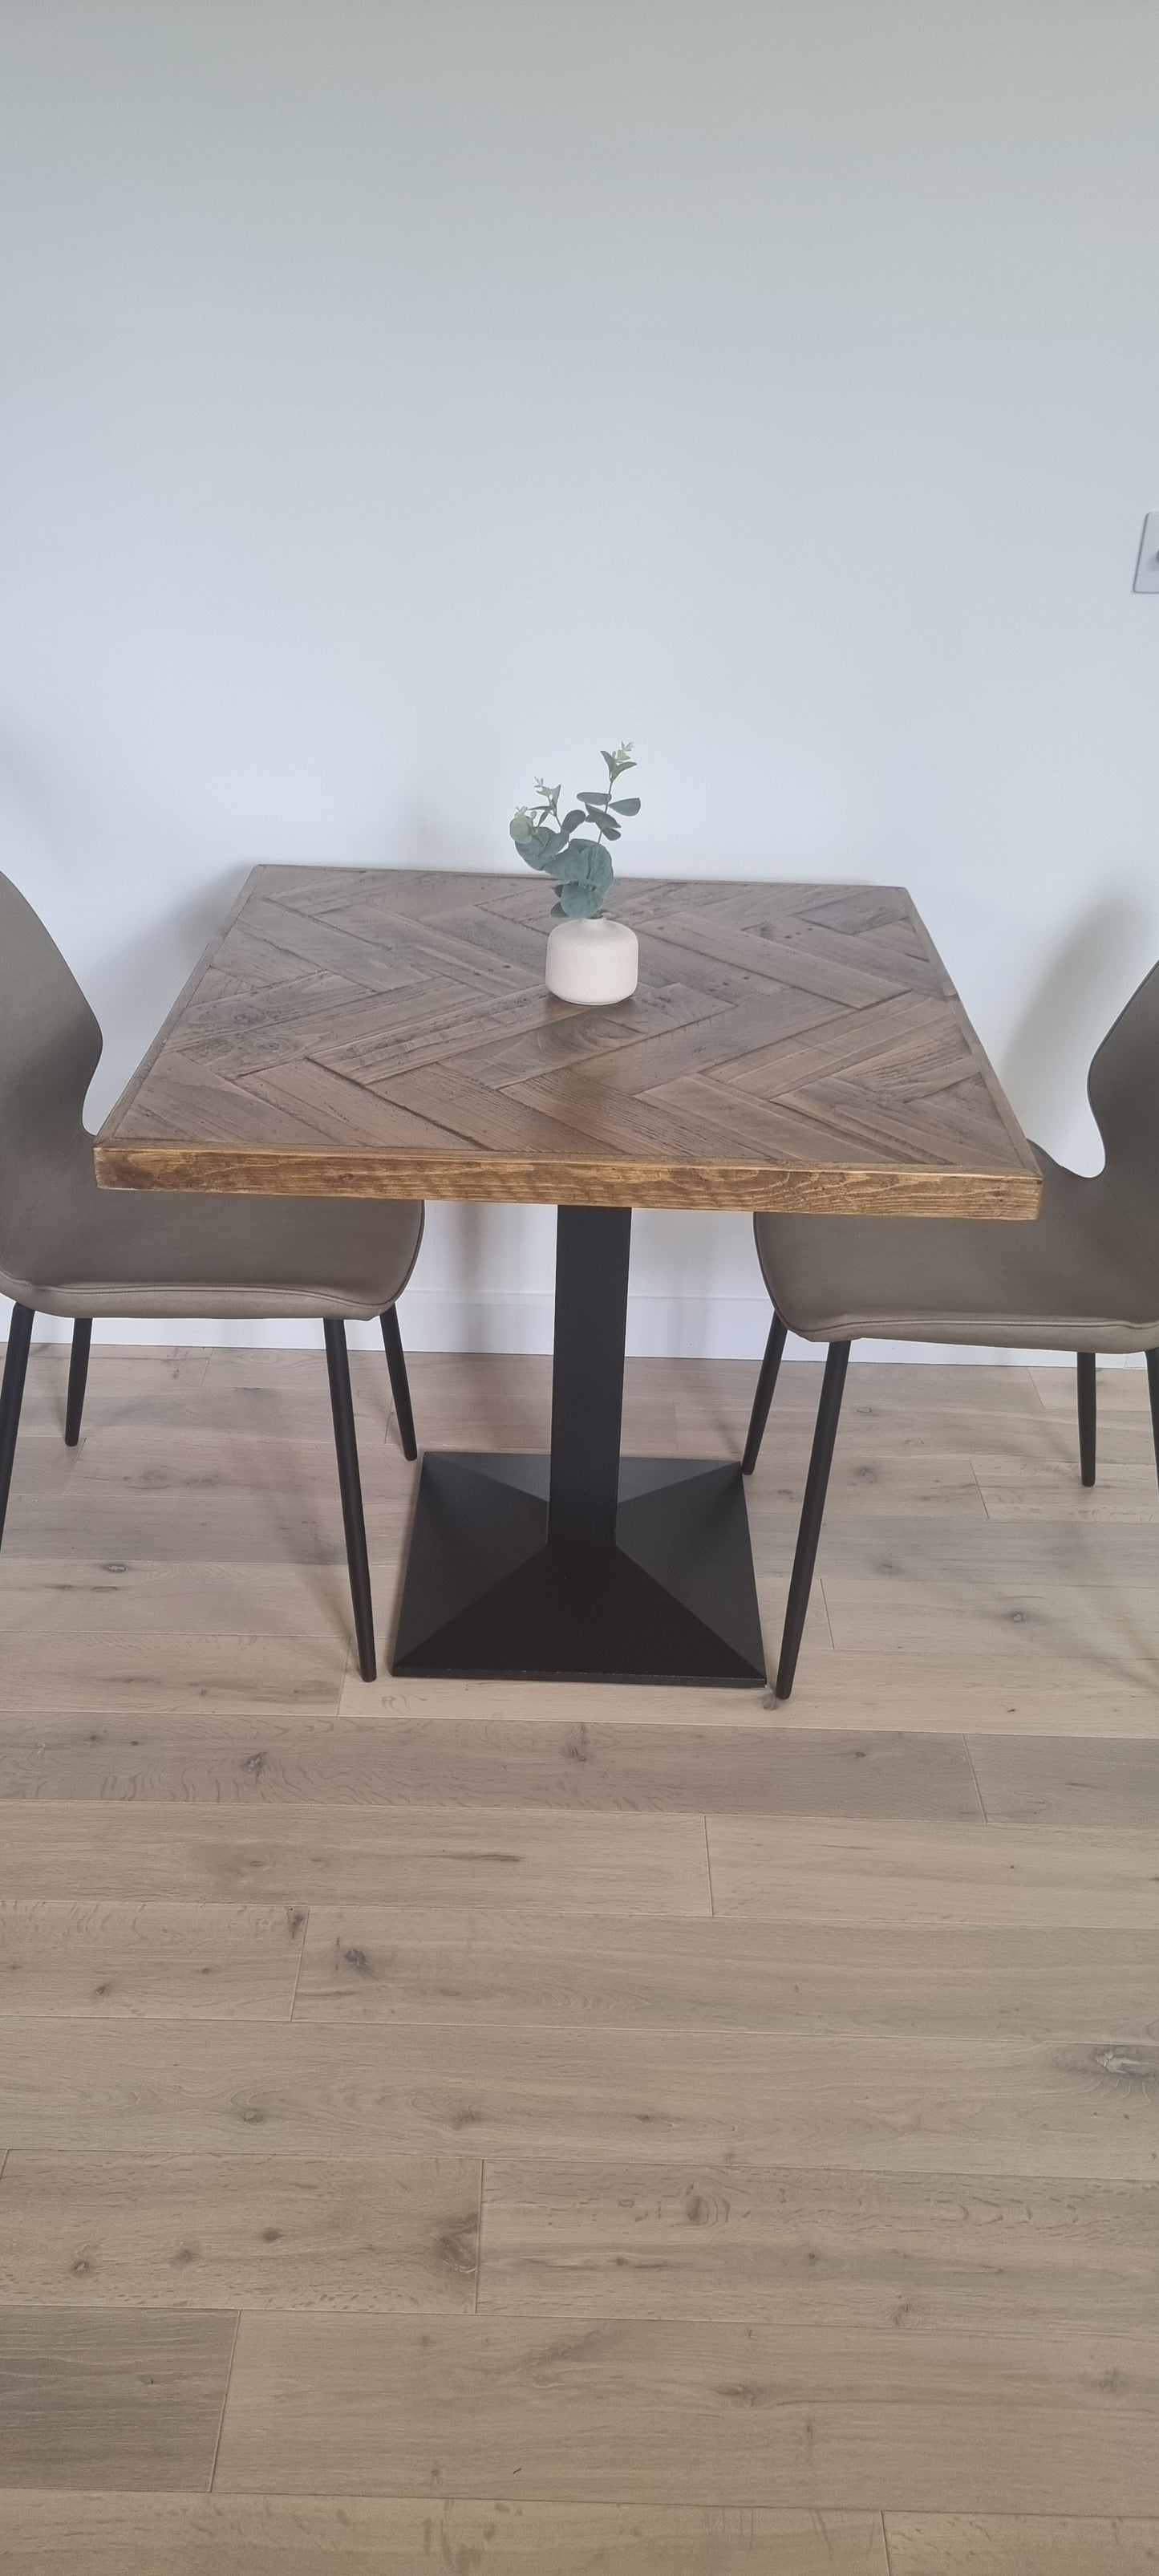 Bistro table in herringbone pattern with pedestal base